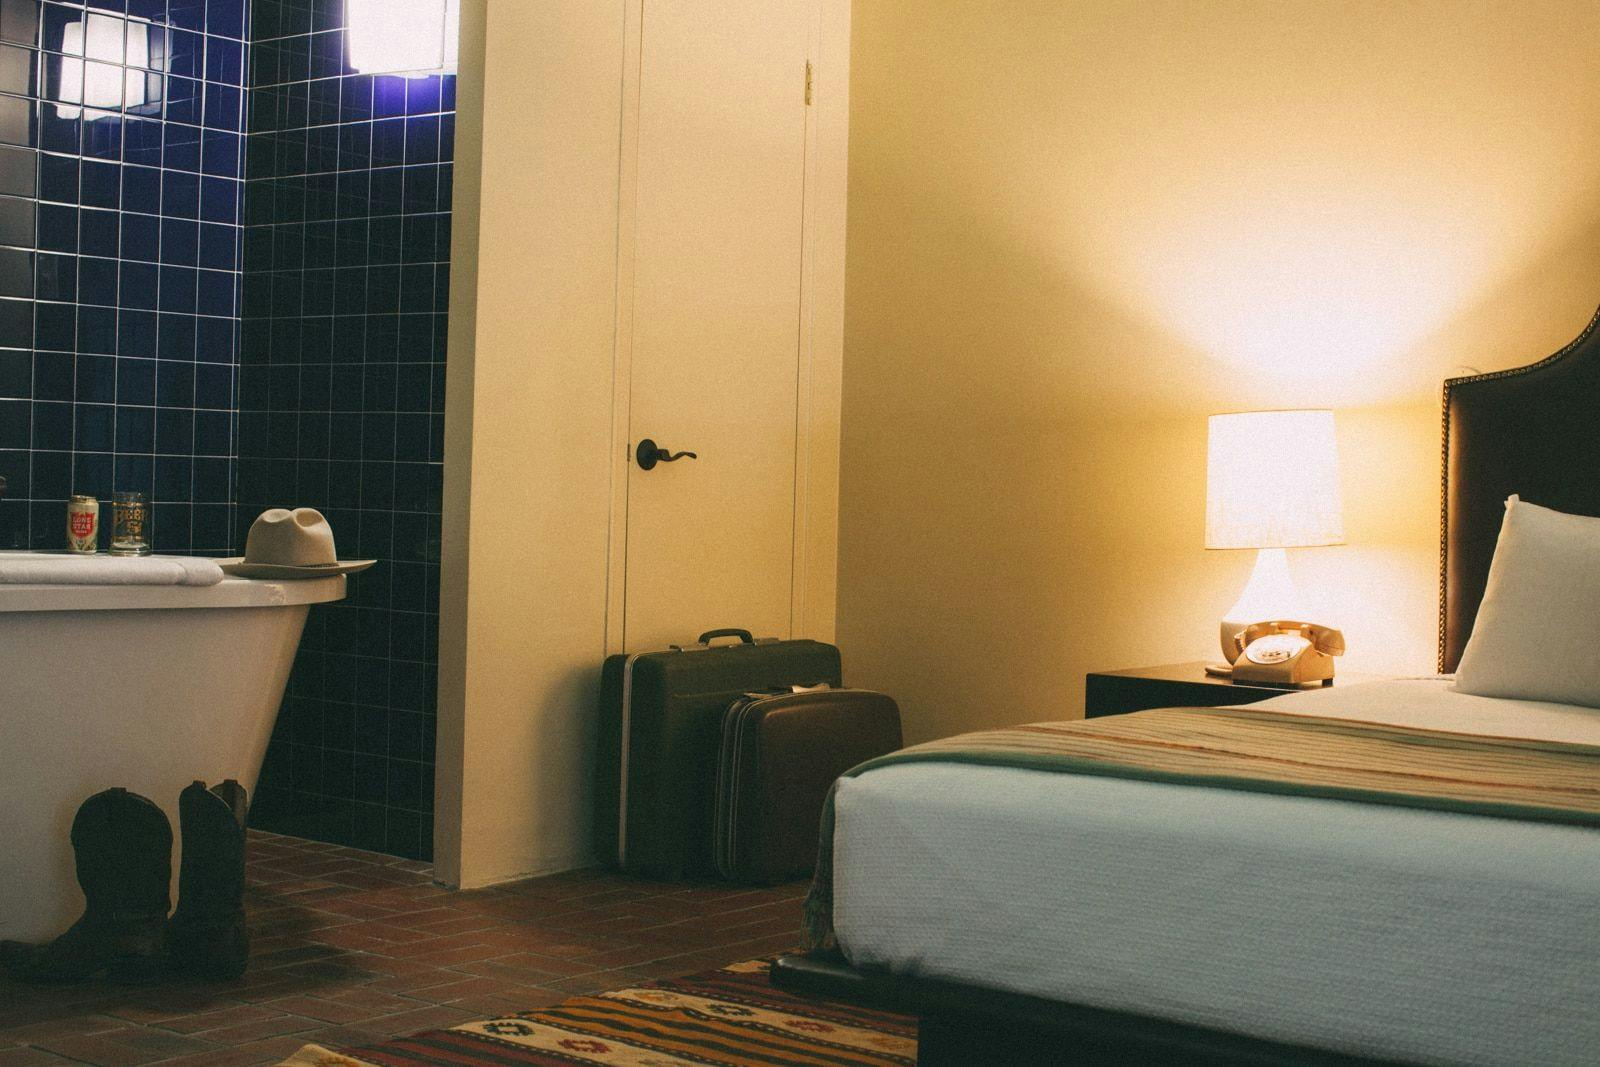 Hotel bedroom with a bathtub